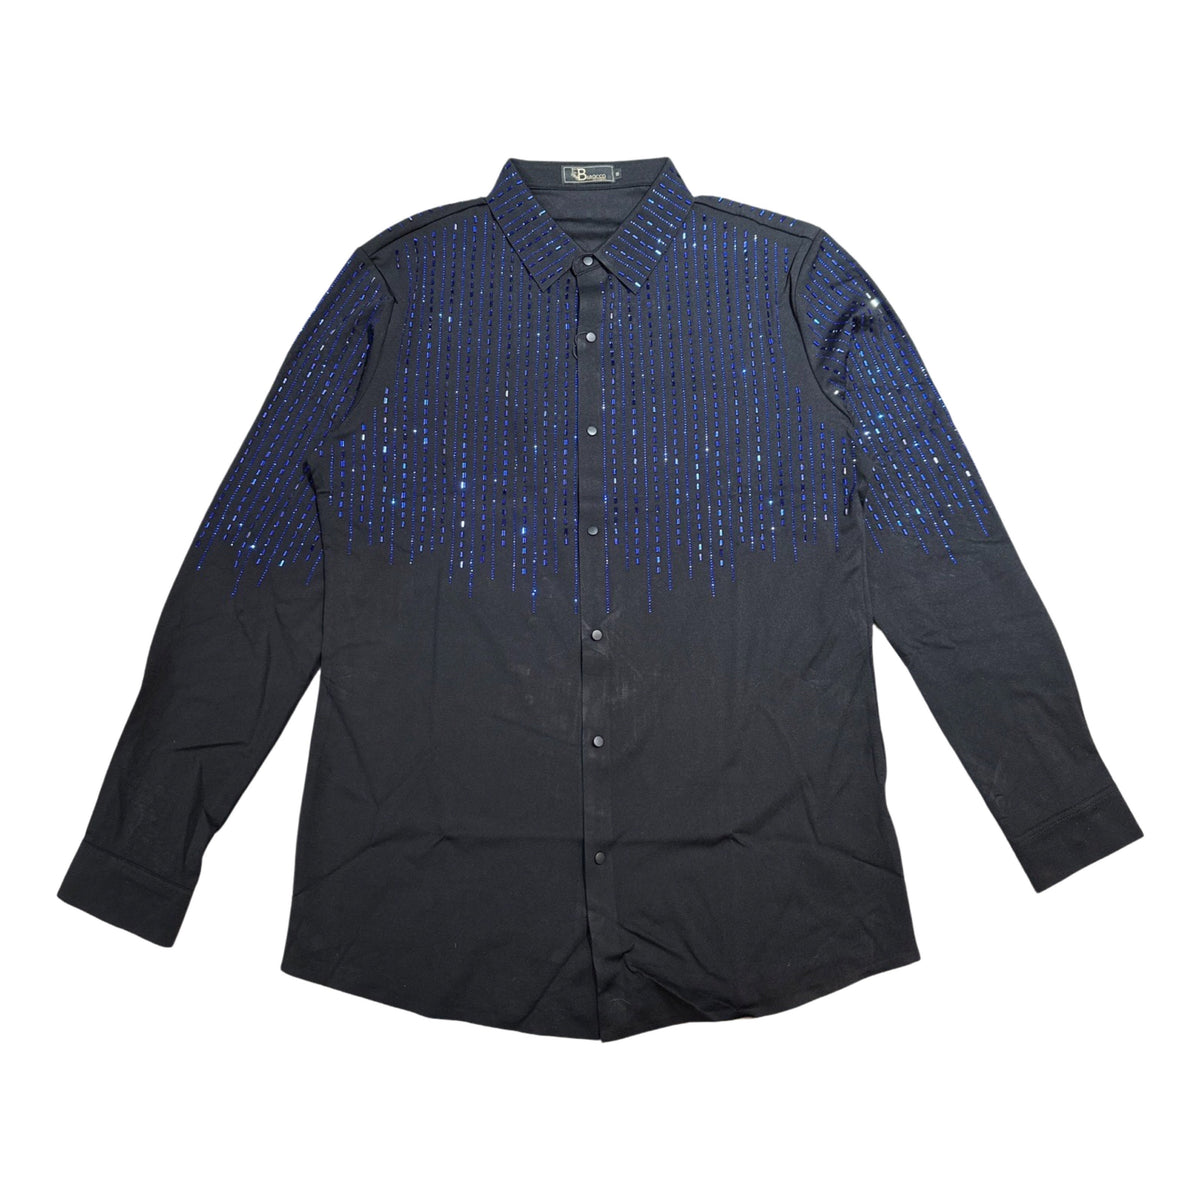 Barocco Black/Blue Crystal Rain Button Up Shirt